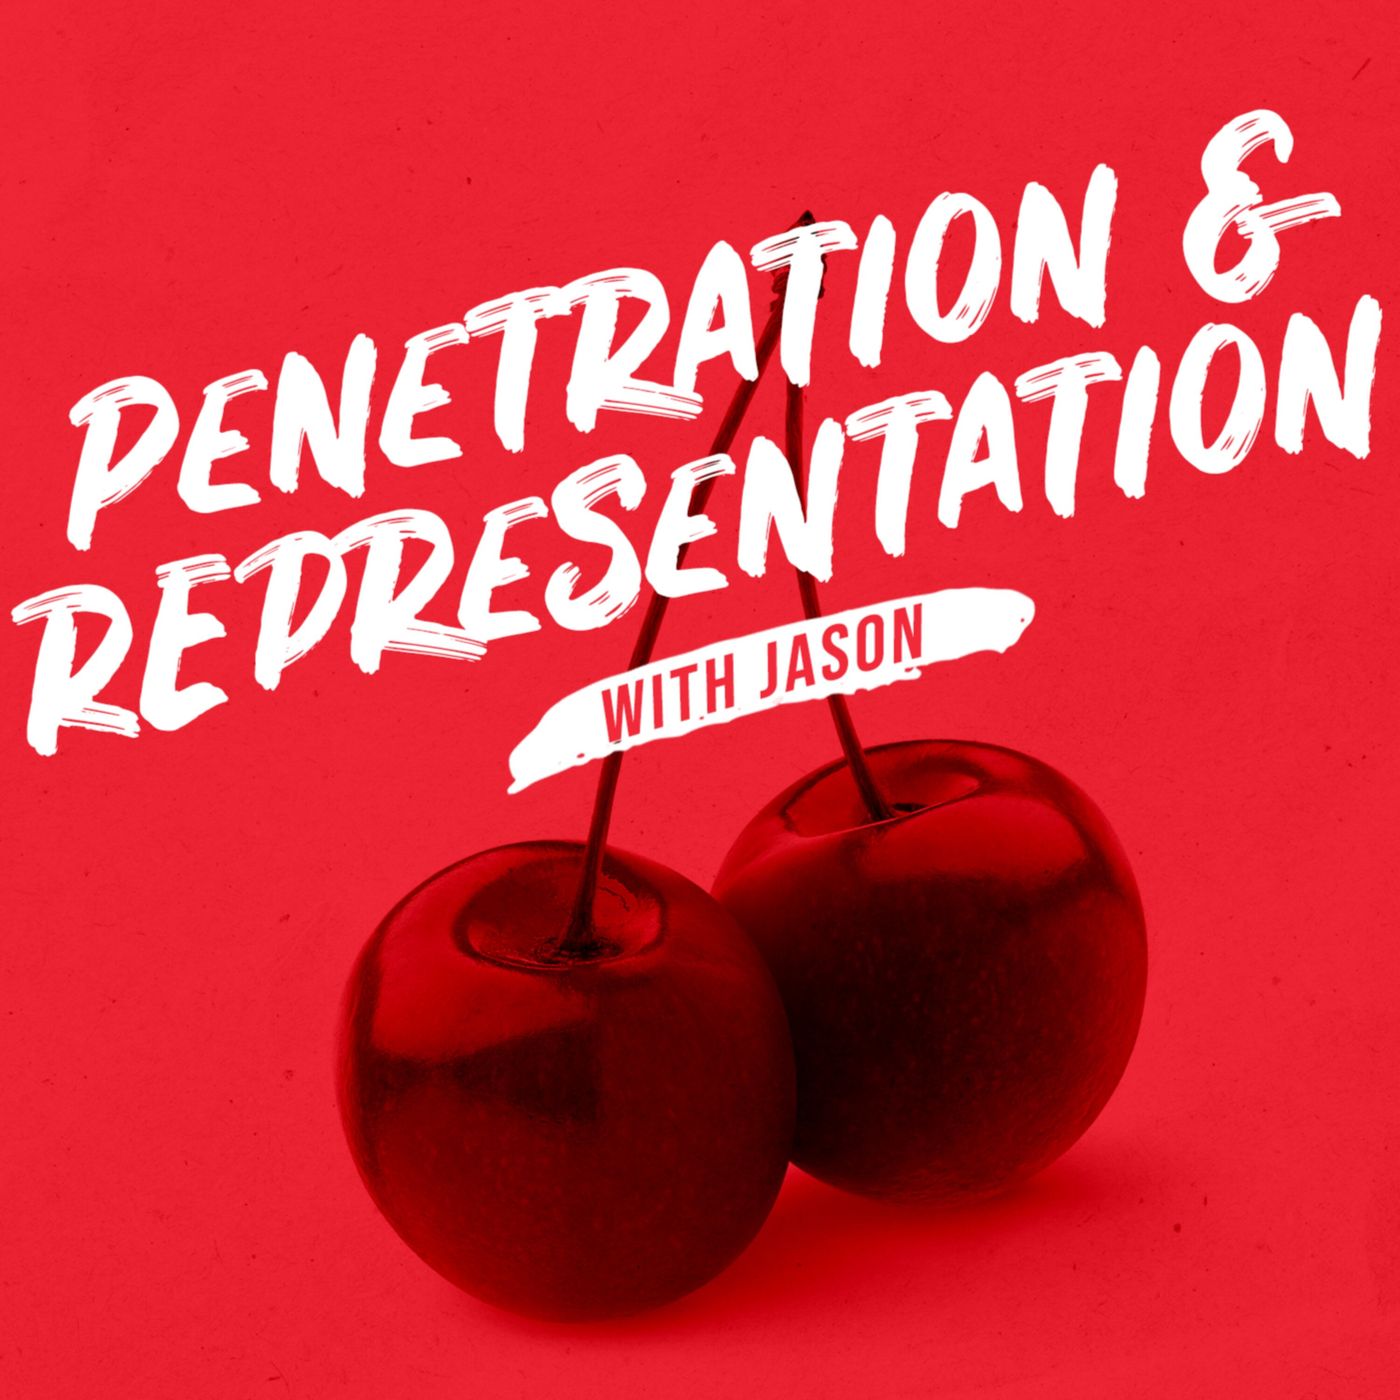 Penetration & Representation with Jason